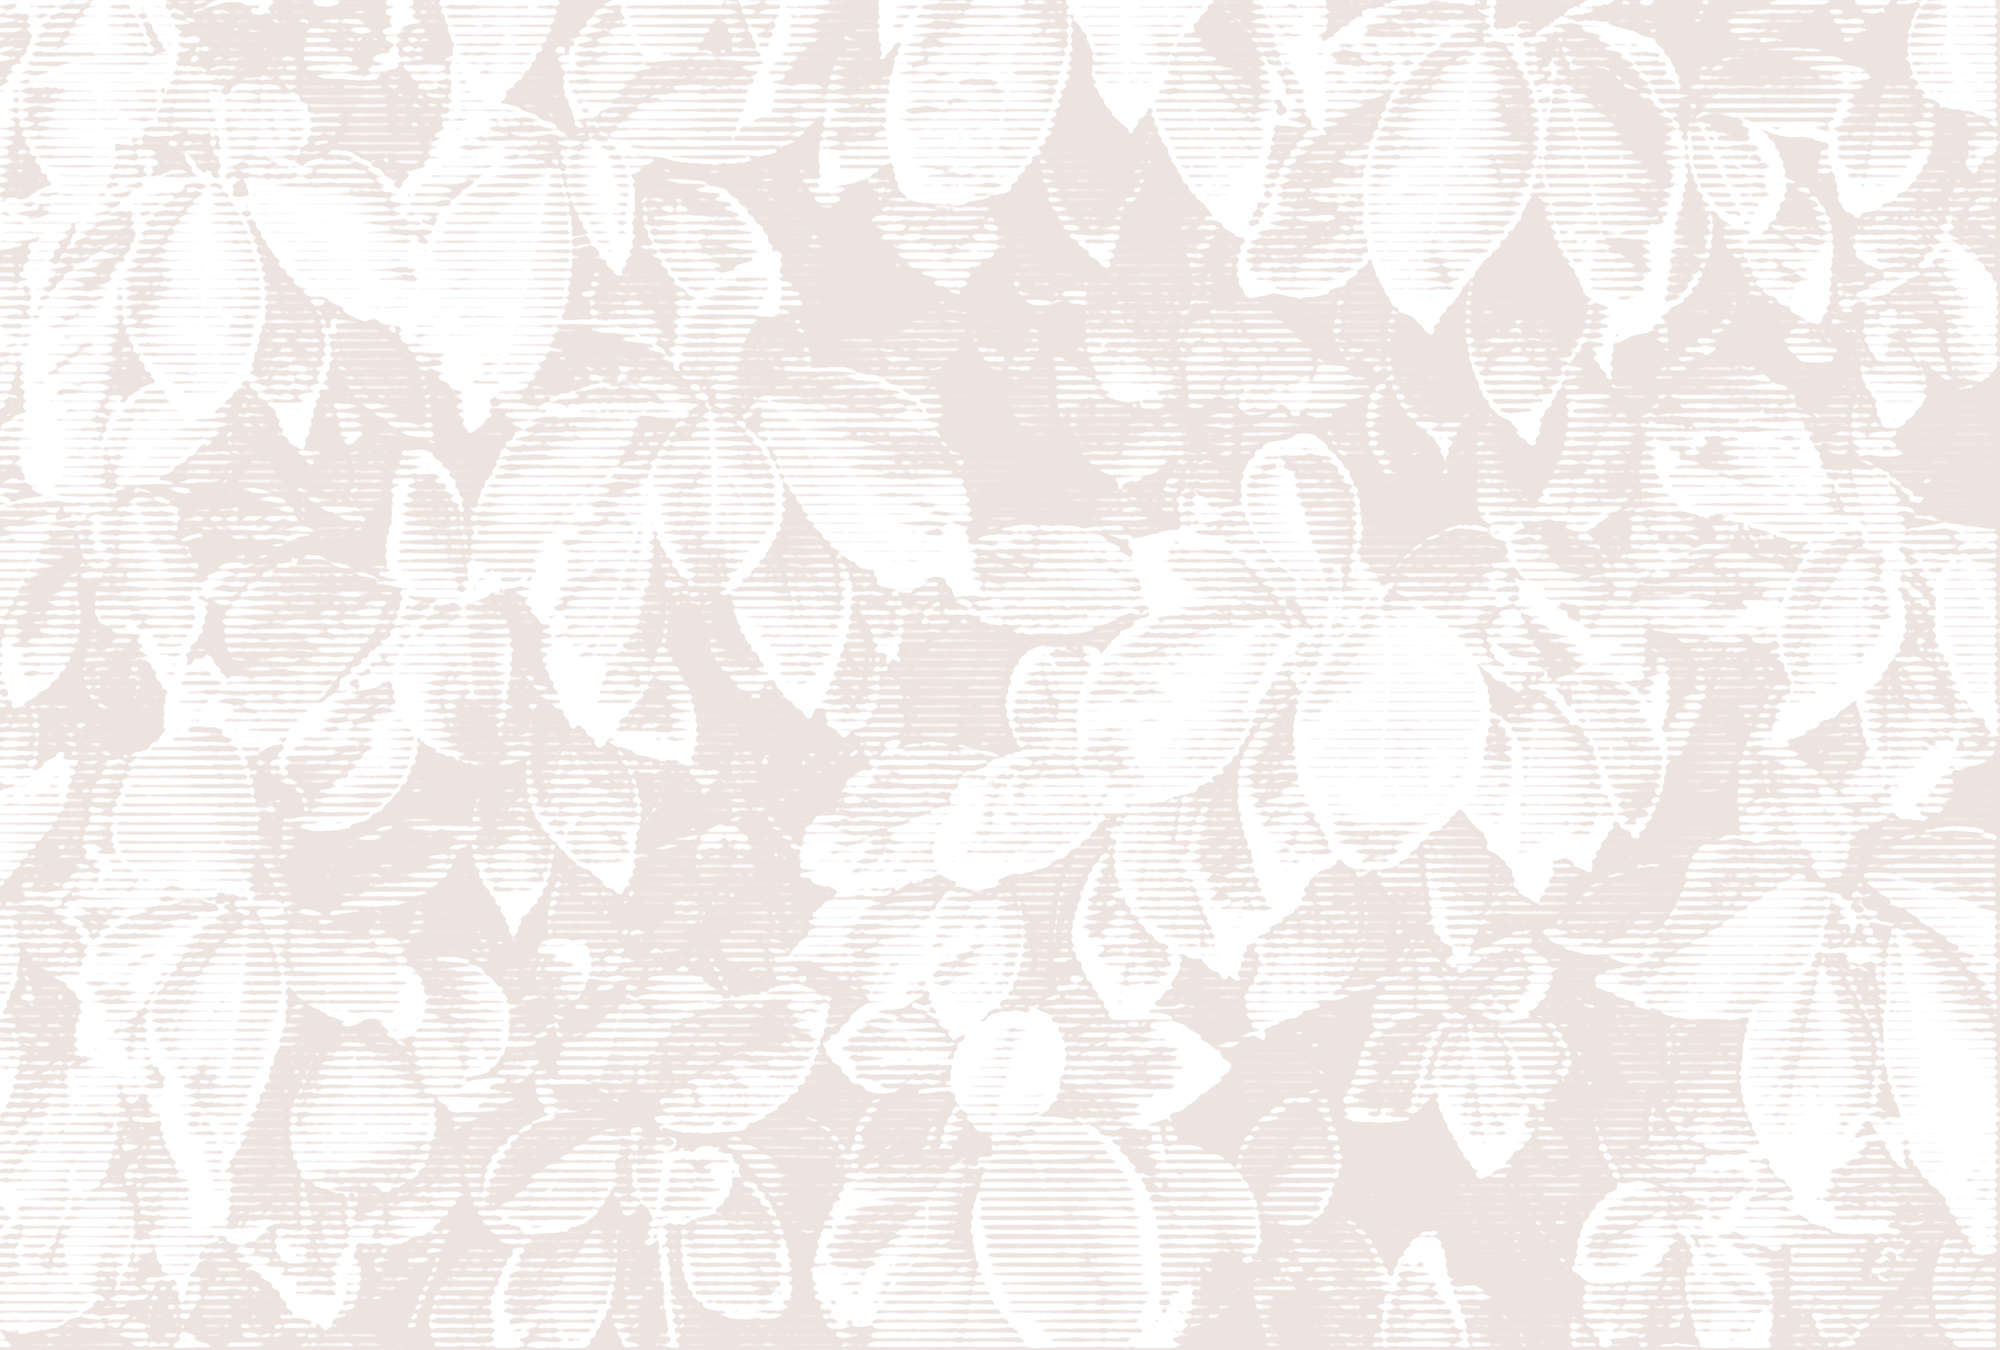             Papel pintado de hojas de aspecto shabby chic - rosa, blanco
        